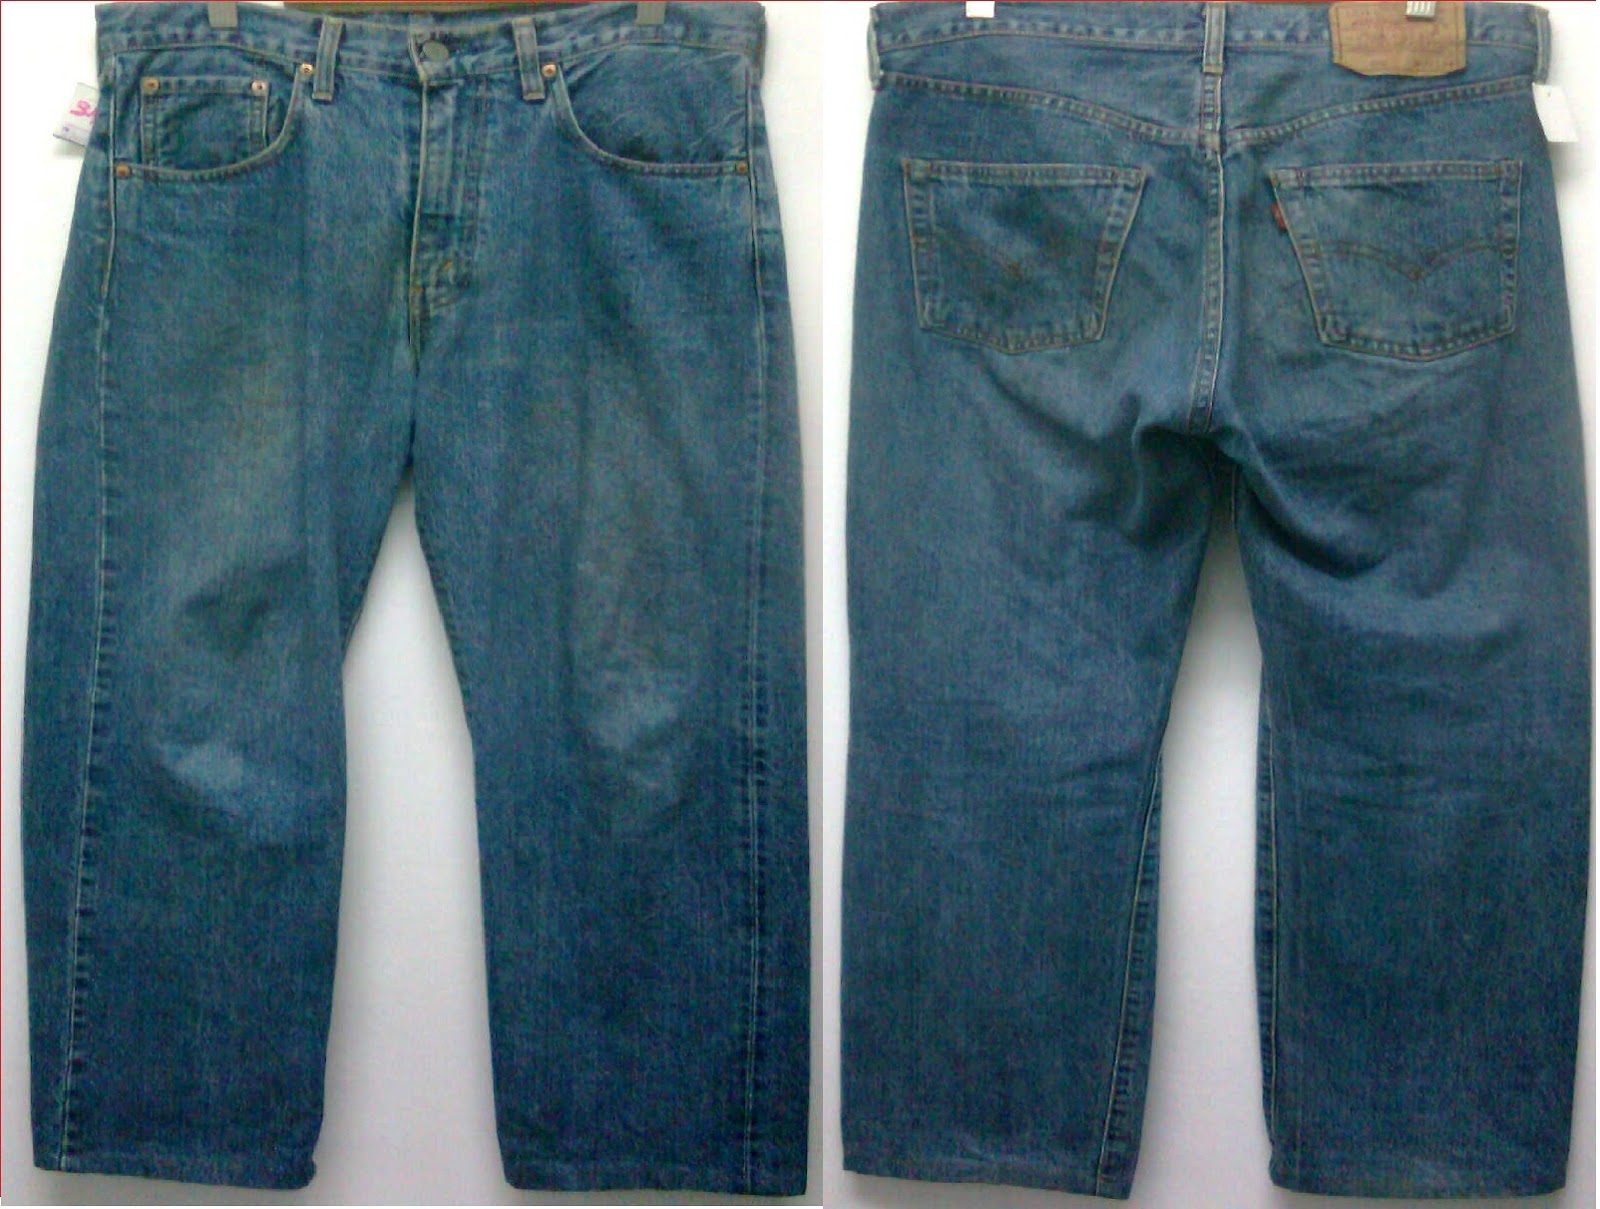 Rakutanstock.Com: LEVI'S Strauss 502 Big E(Used)Selvage Jeans